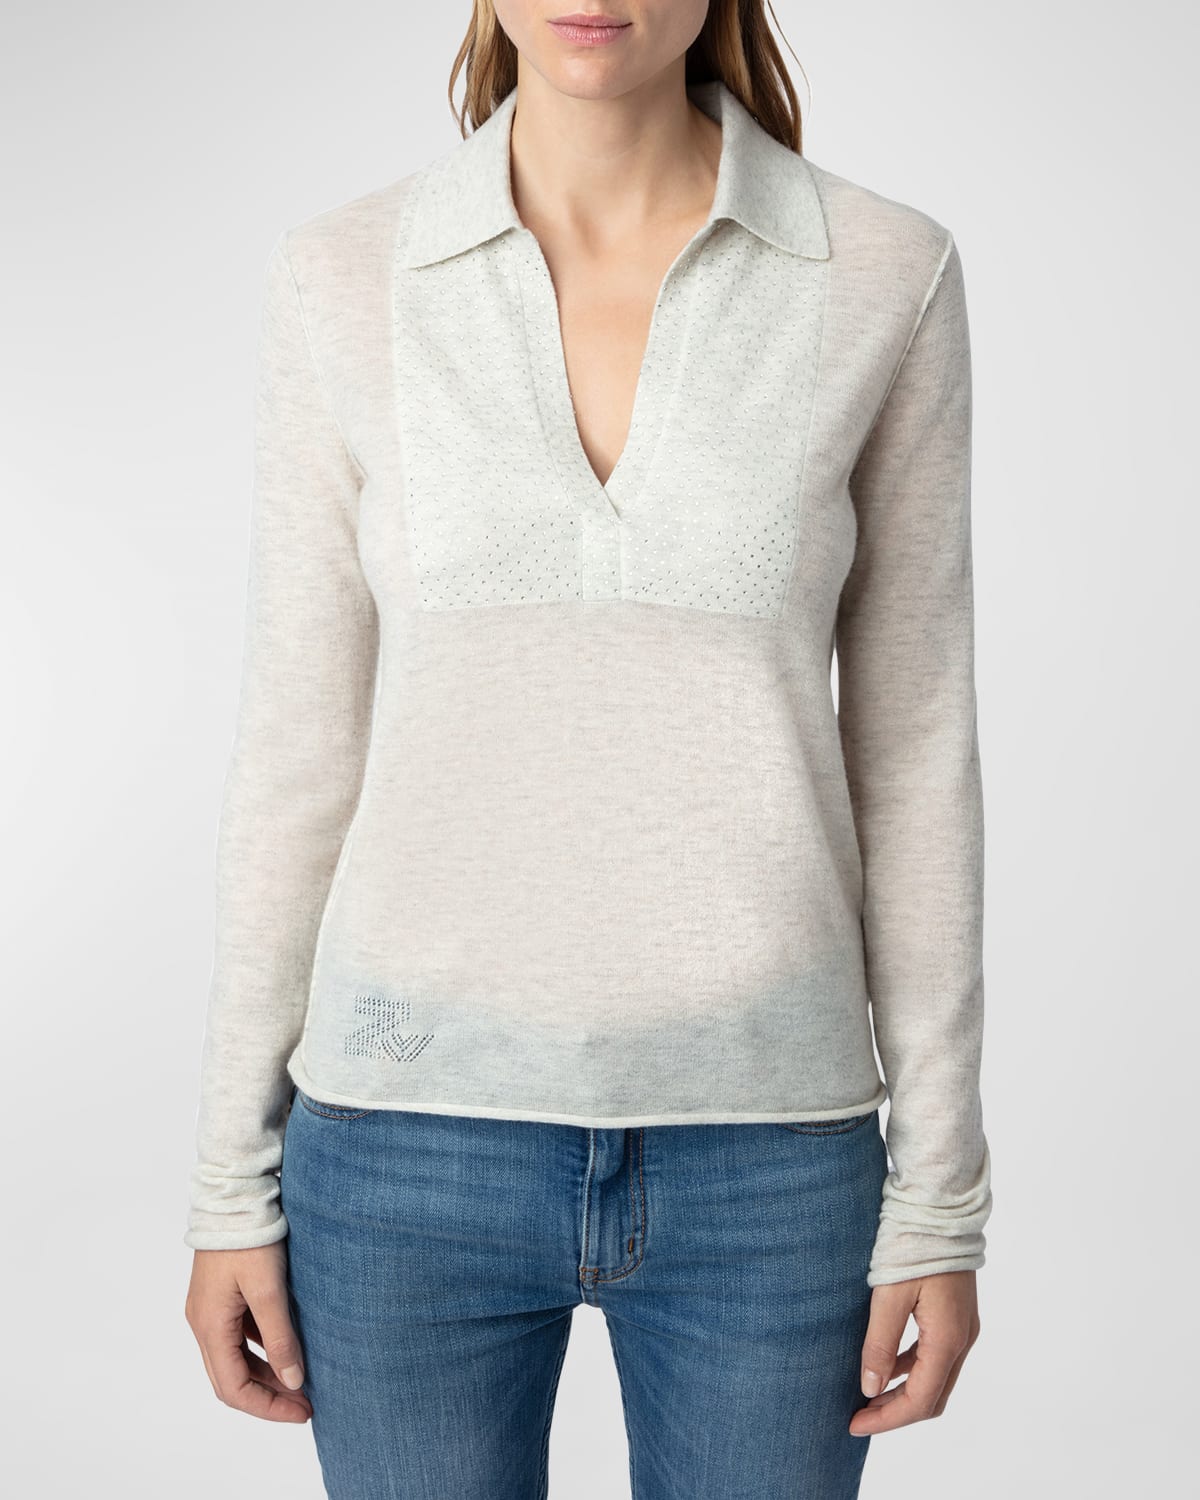 Sally Diamante Cashmere Sweater